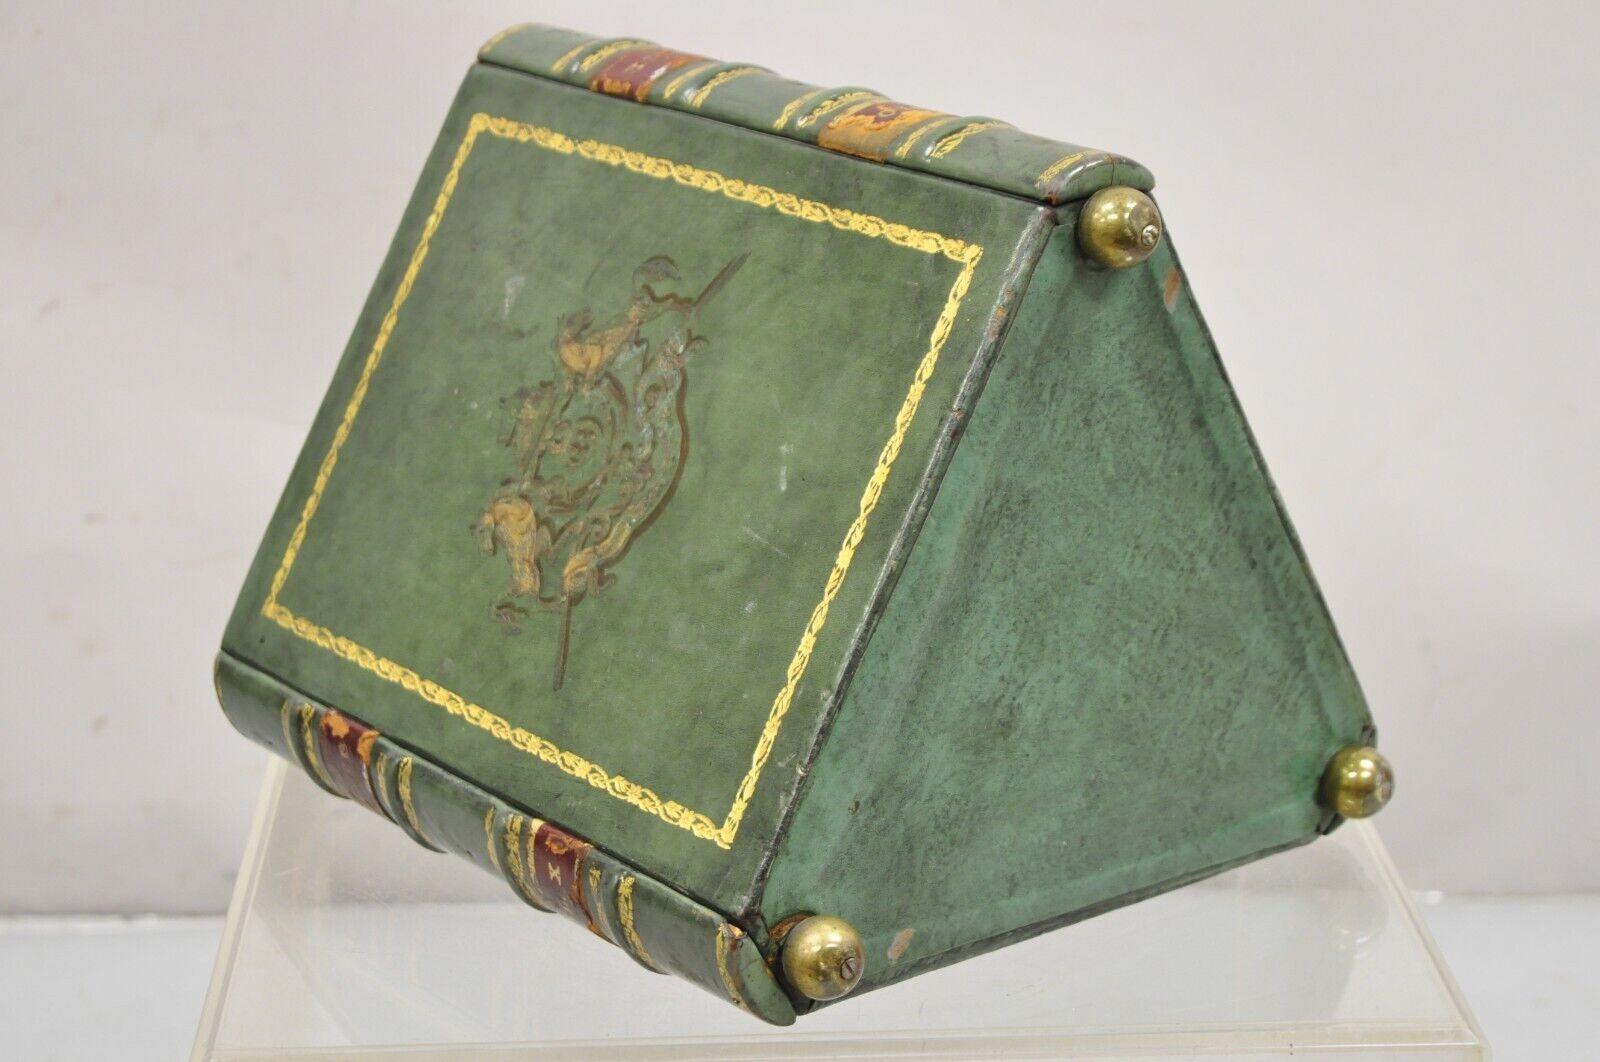 Brass Vintage Italian Regency Green Leather Triangular Book Form Wastebasket Trashcan For Sale